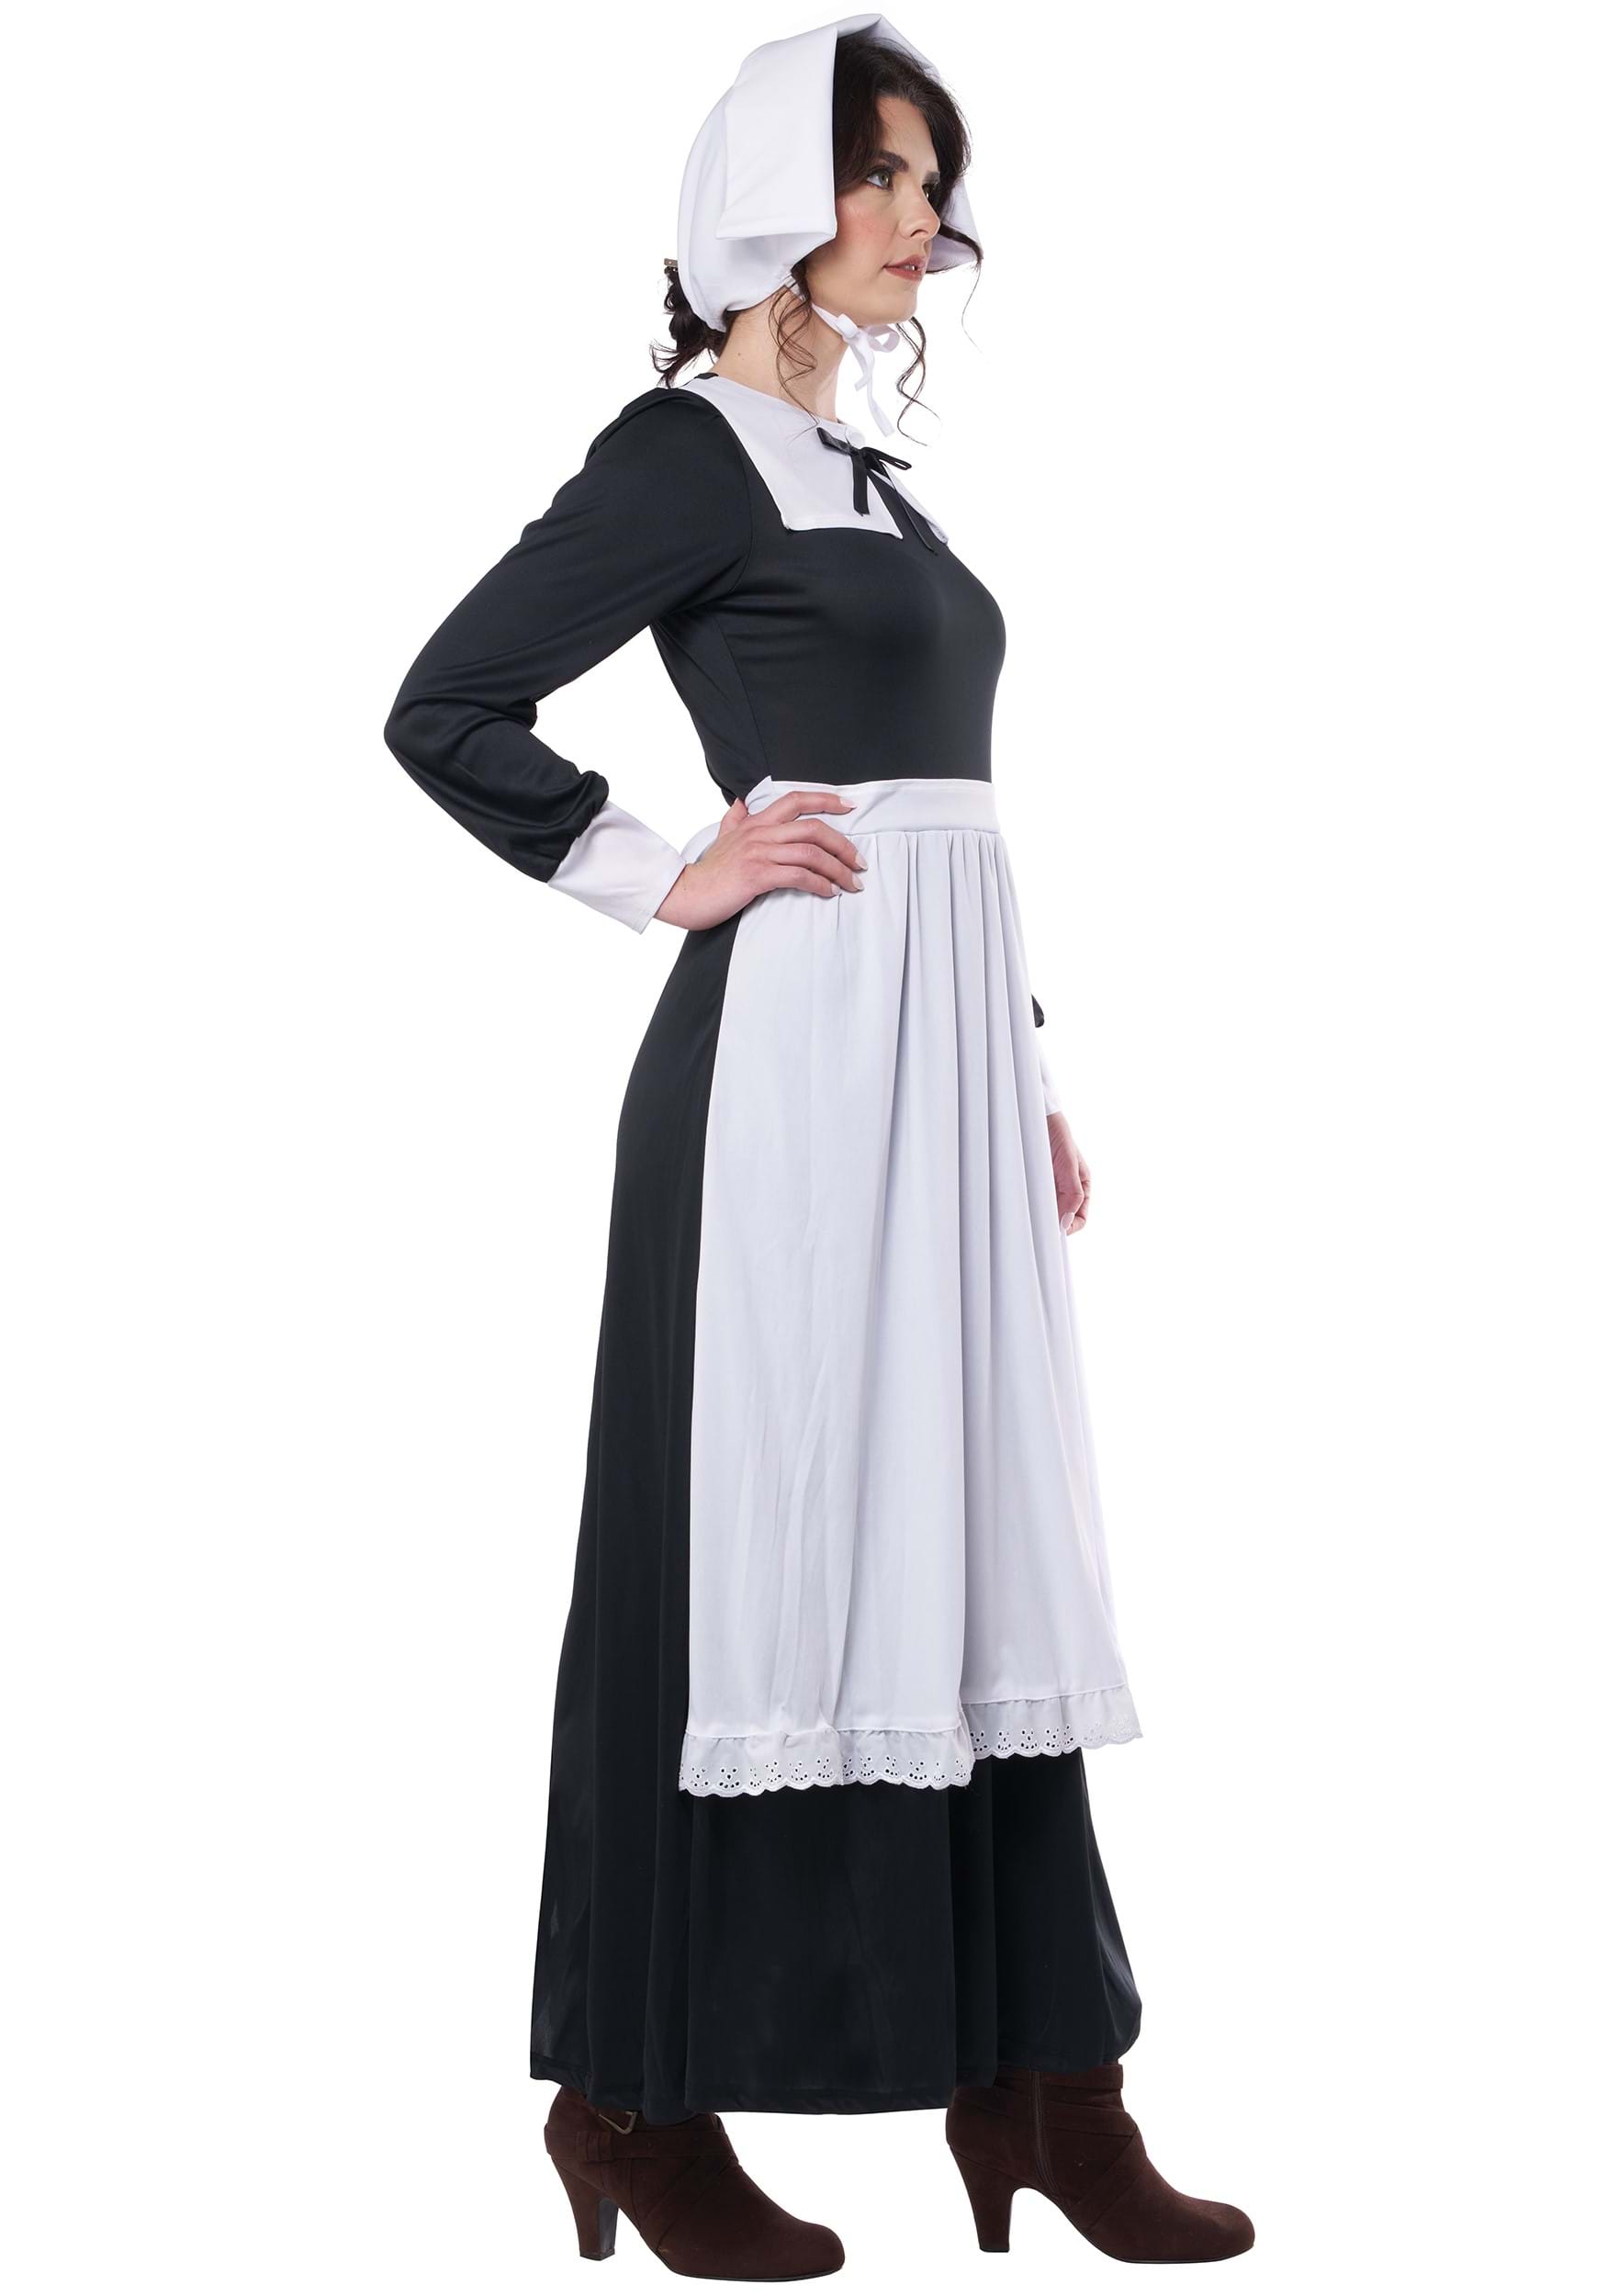 Pilgrim Woman Costume